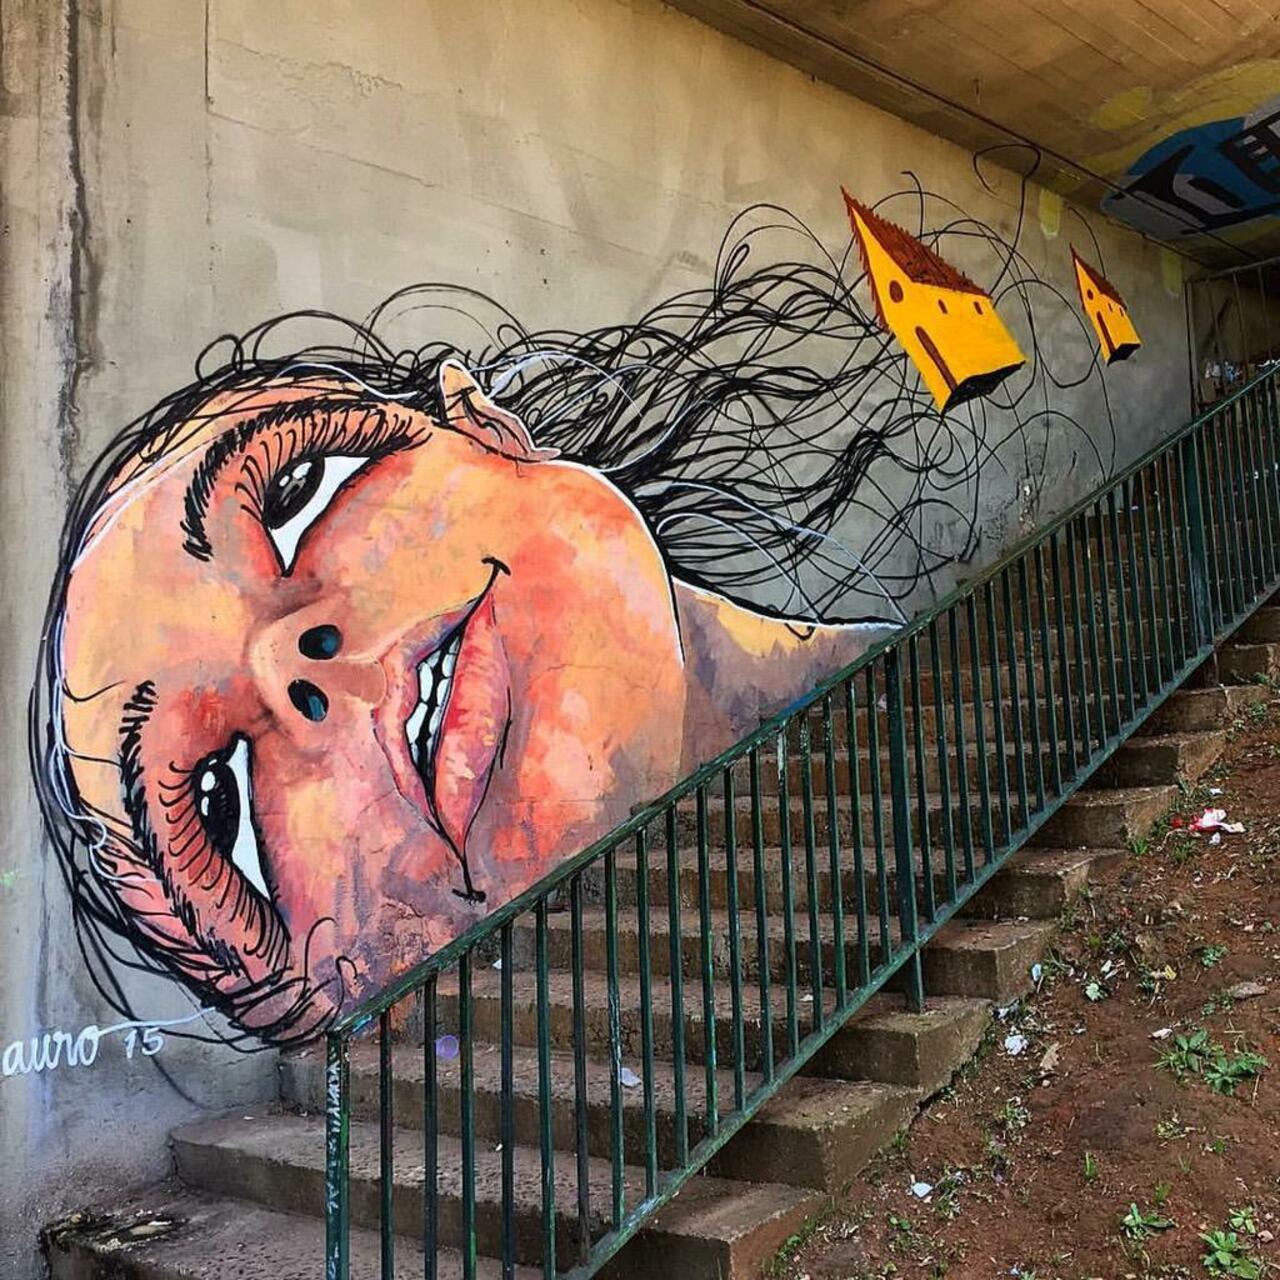 Street Art by Reveracidade in São Paulo 

#art #graffiti #mural #streetart http://t.co/4ep4qlluQ4